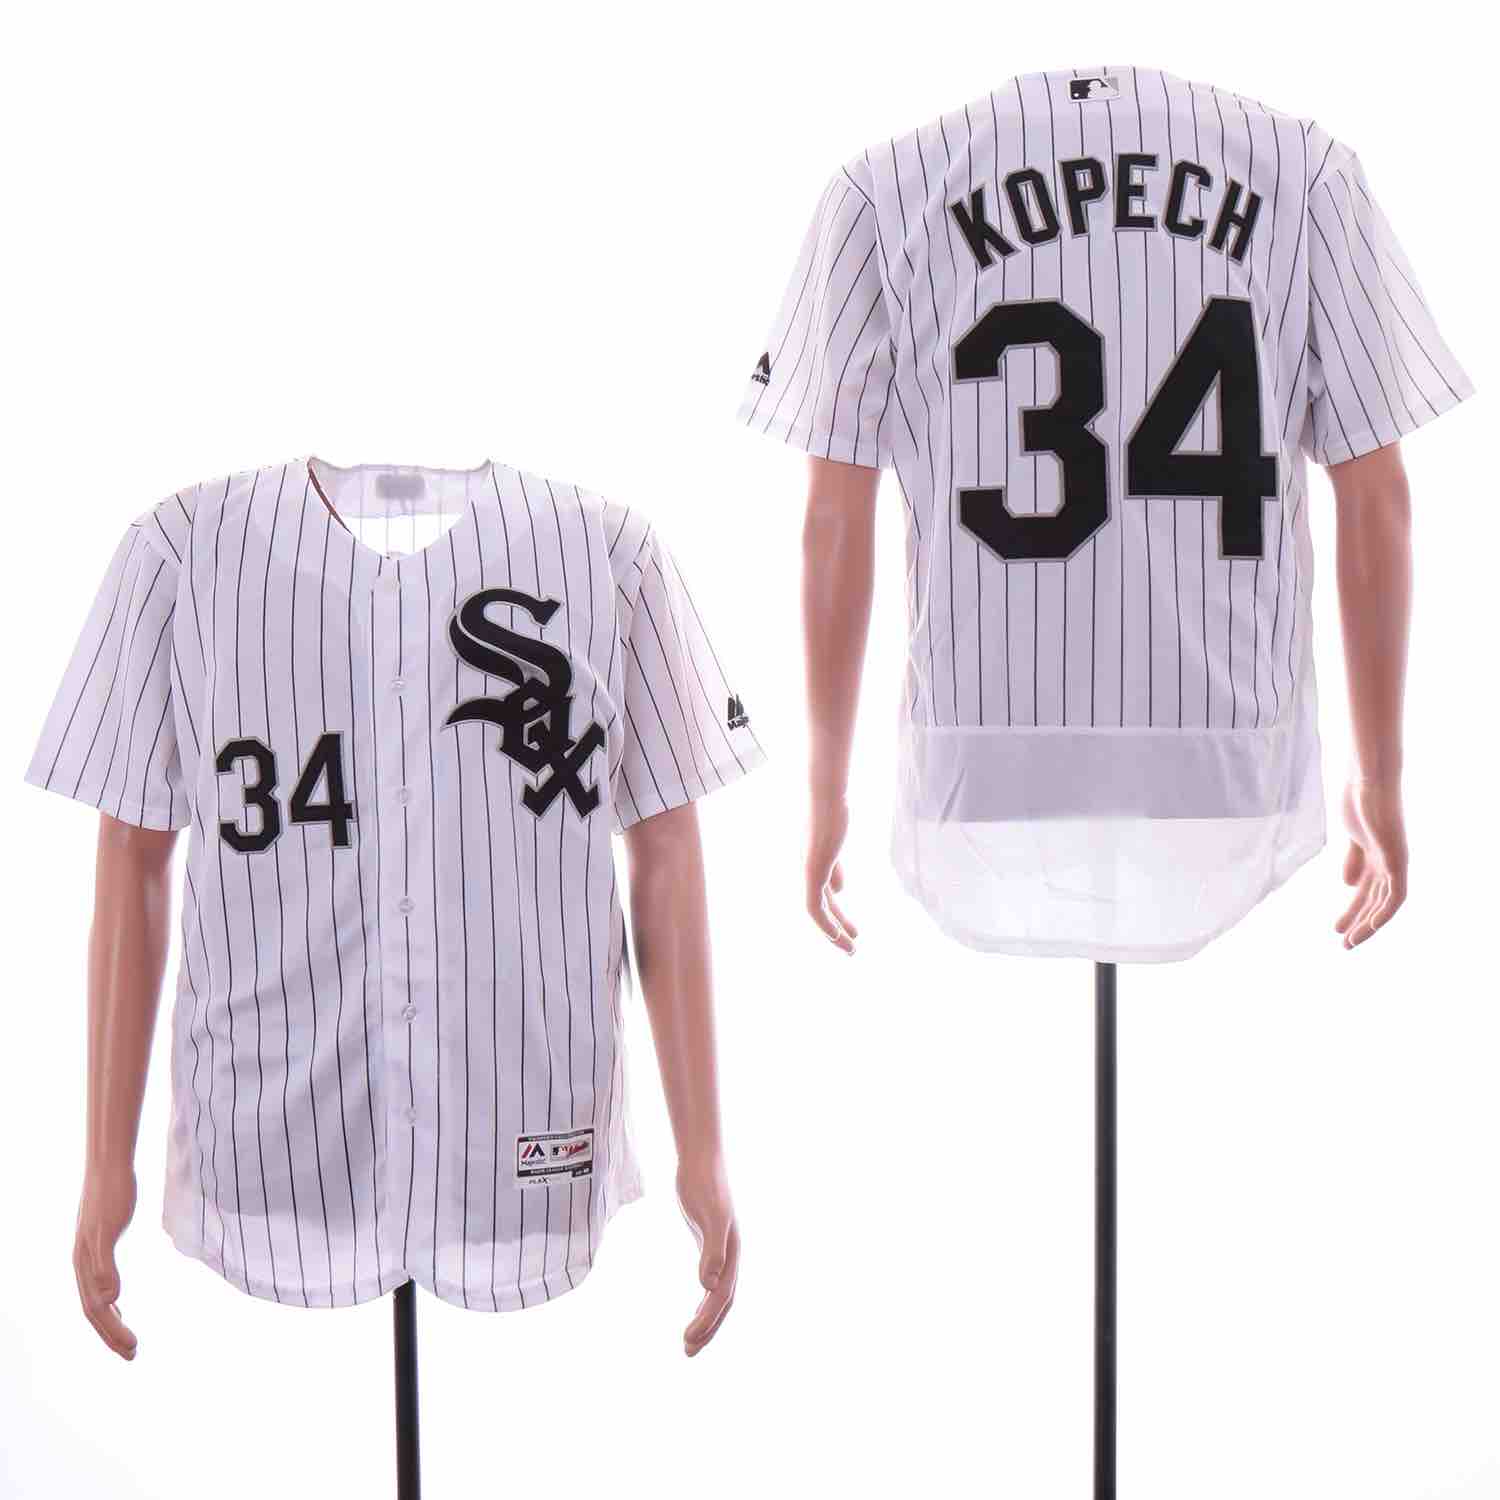 MLB Chicago White Sox #34 Kopech White Elite Jersey